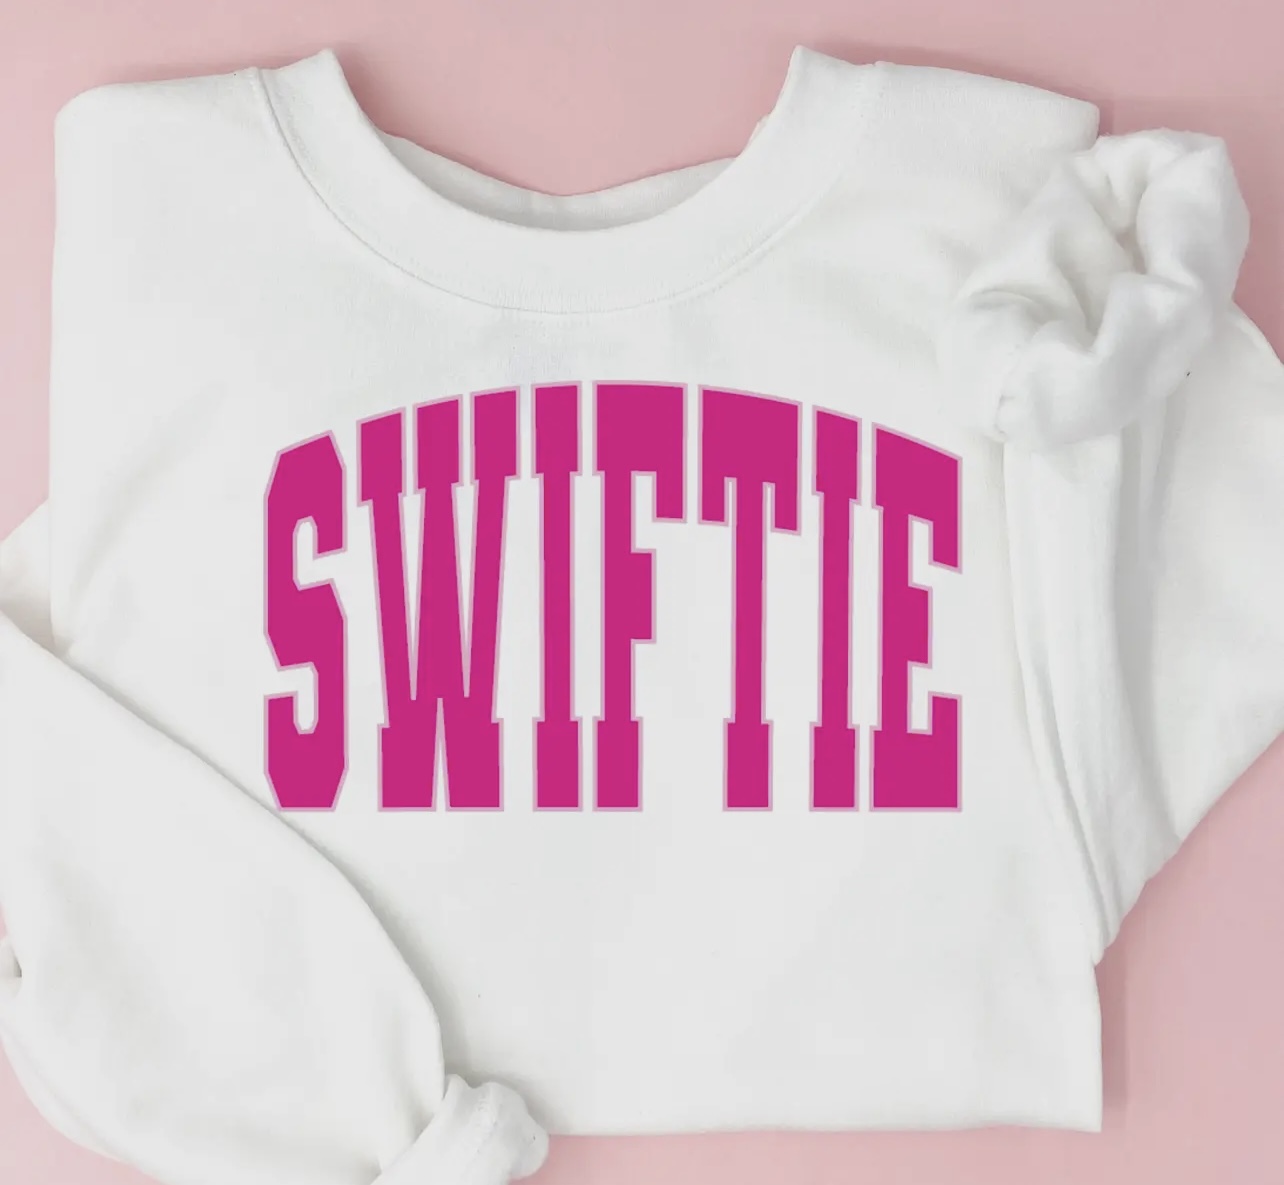 Swiftie Sweatshirt - Youth Large